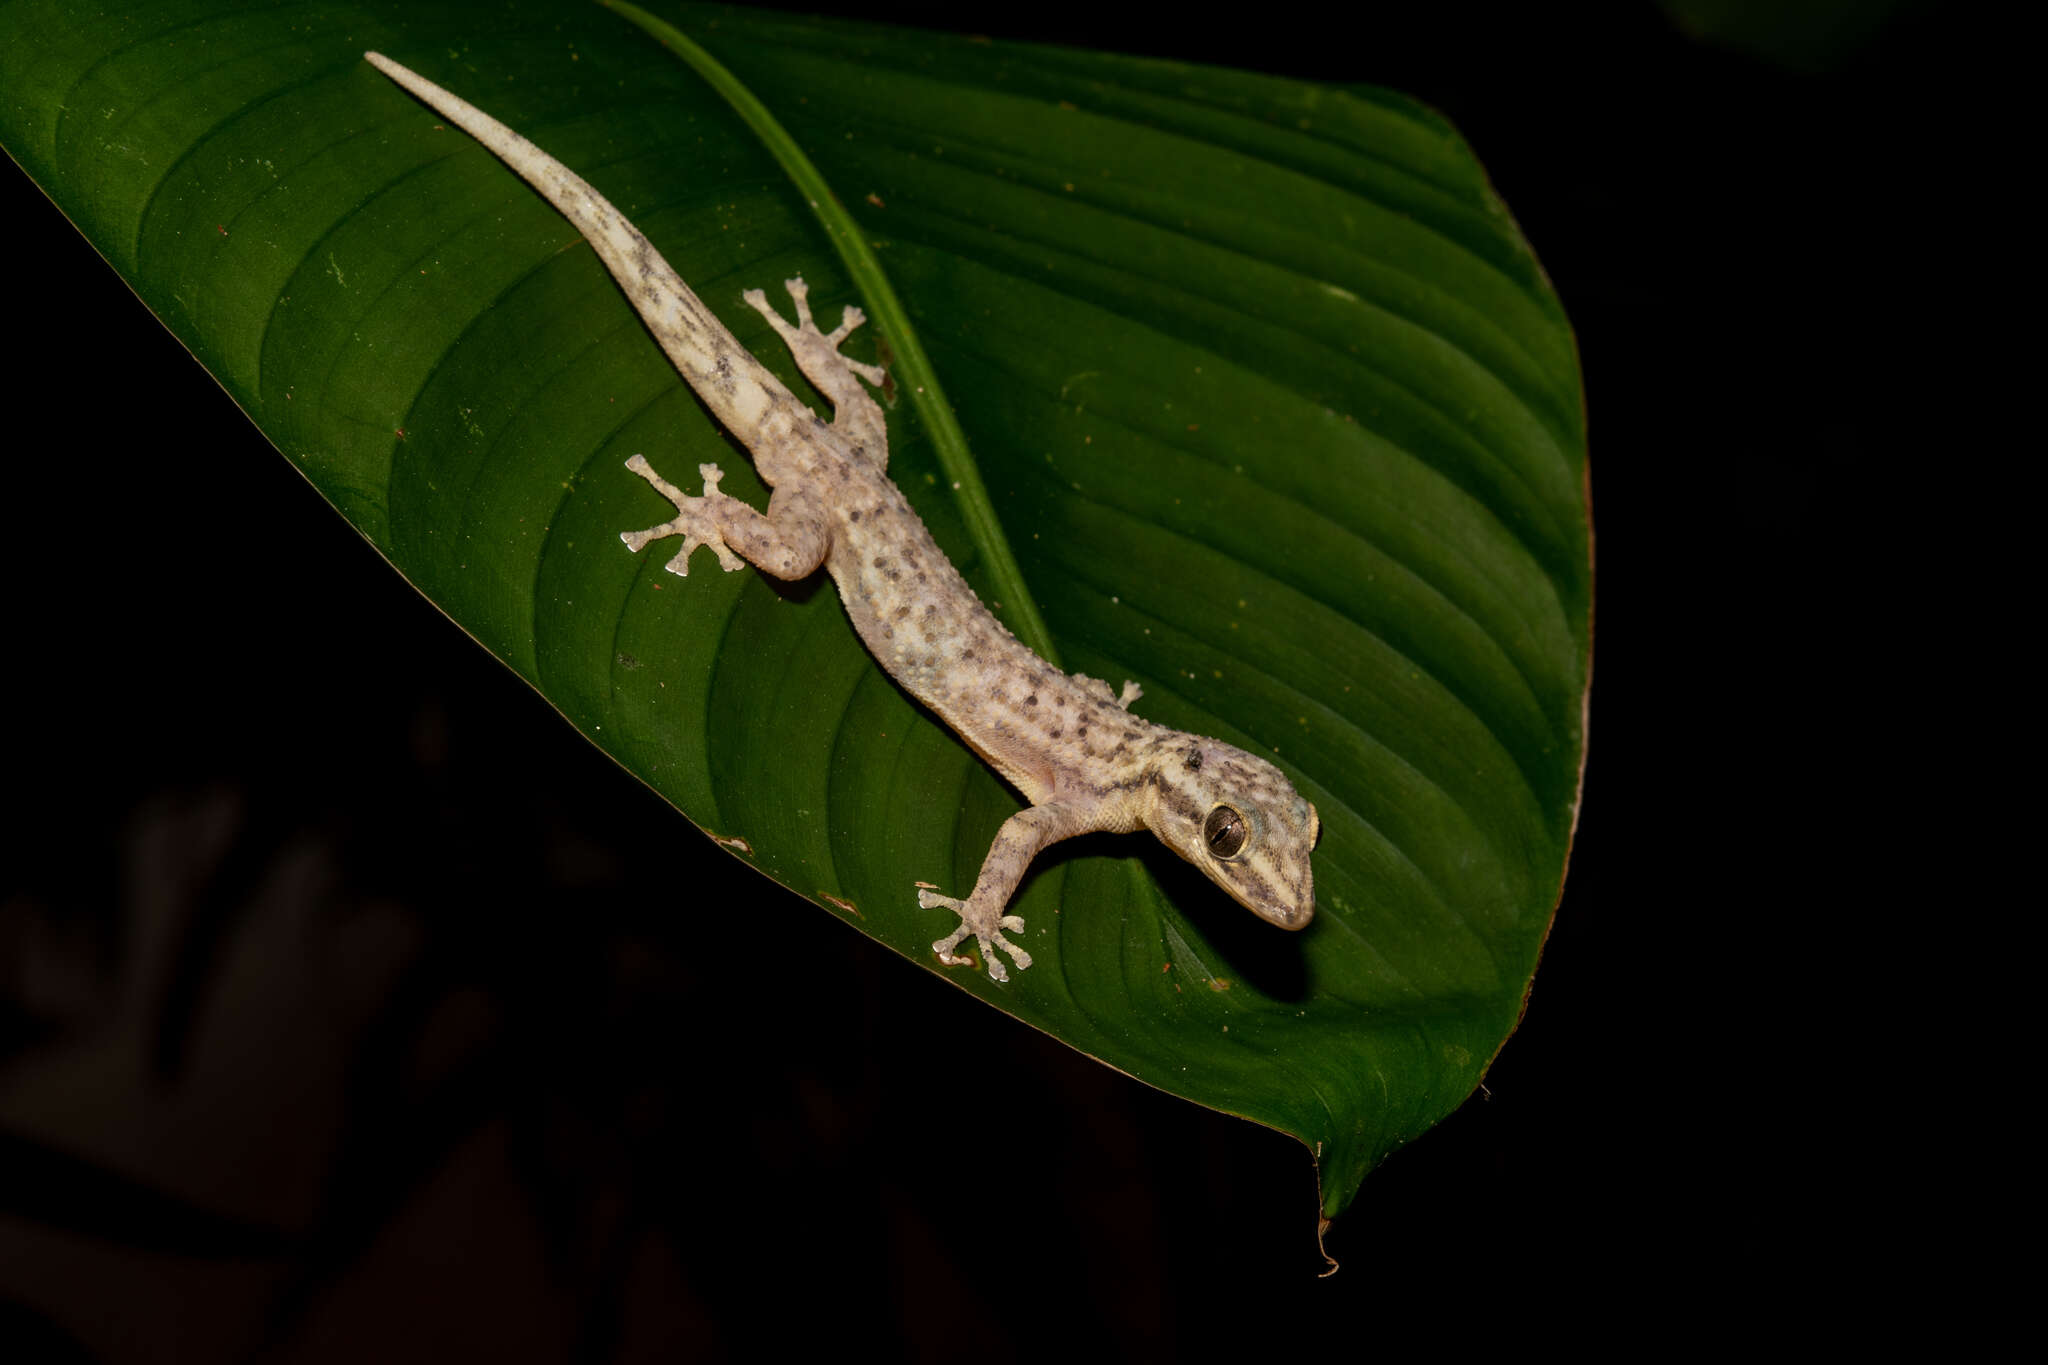 Image of Honduras Leaf-toed Gecko